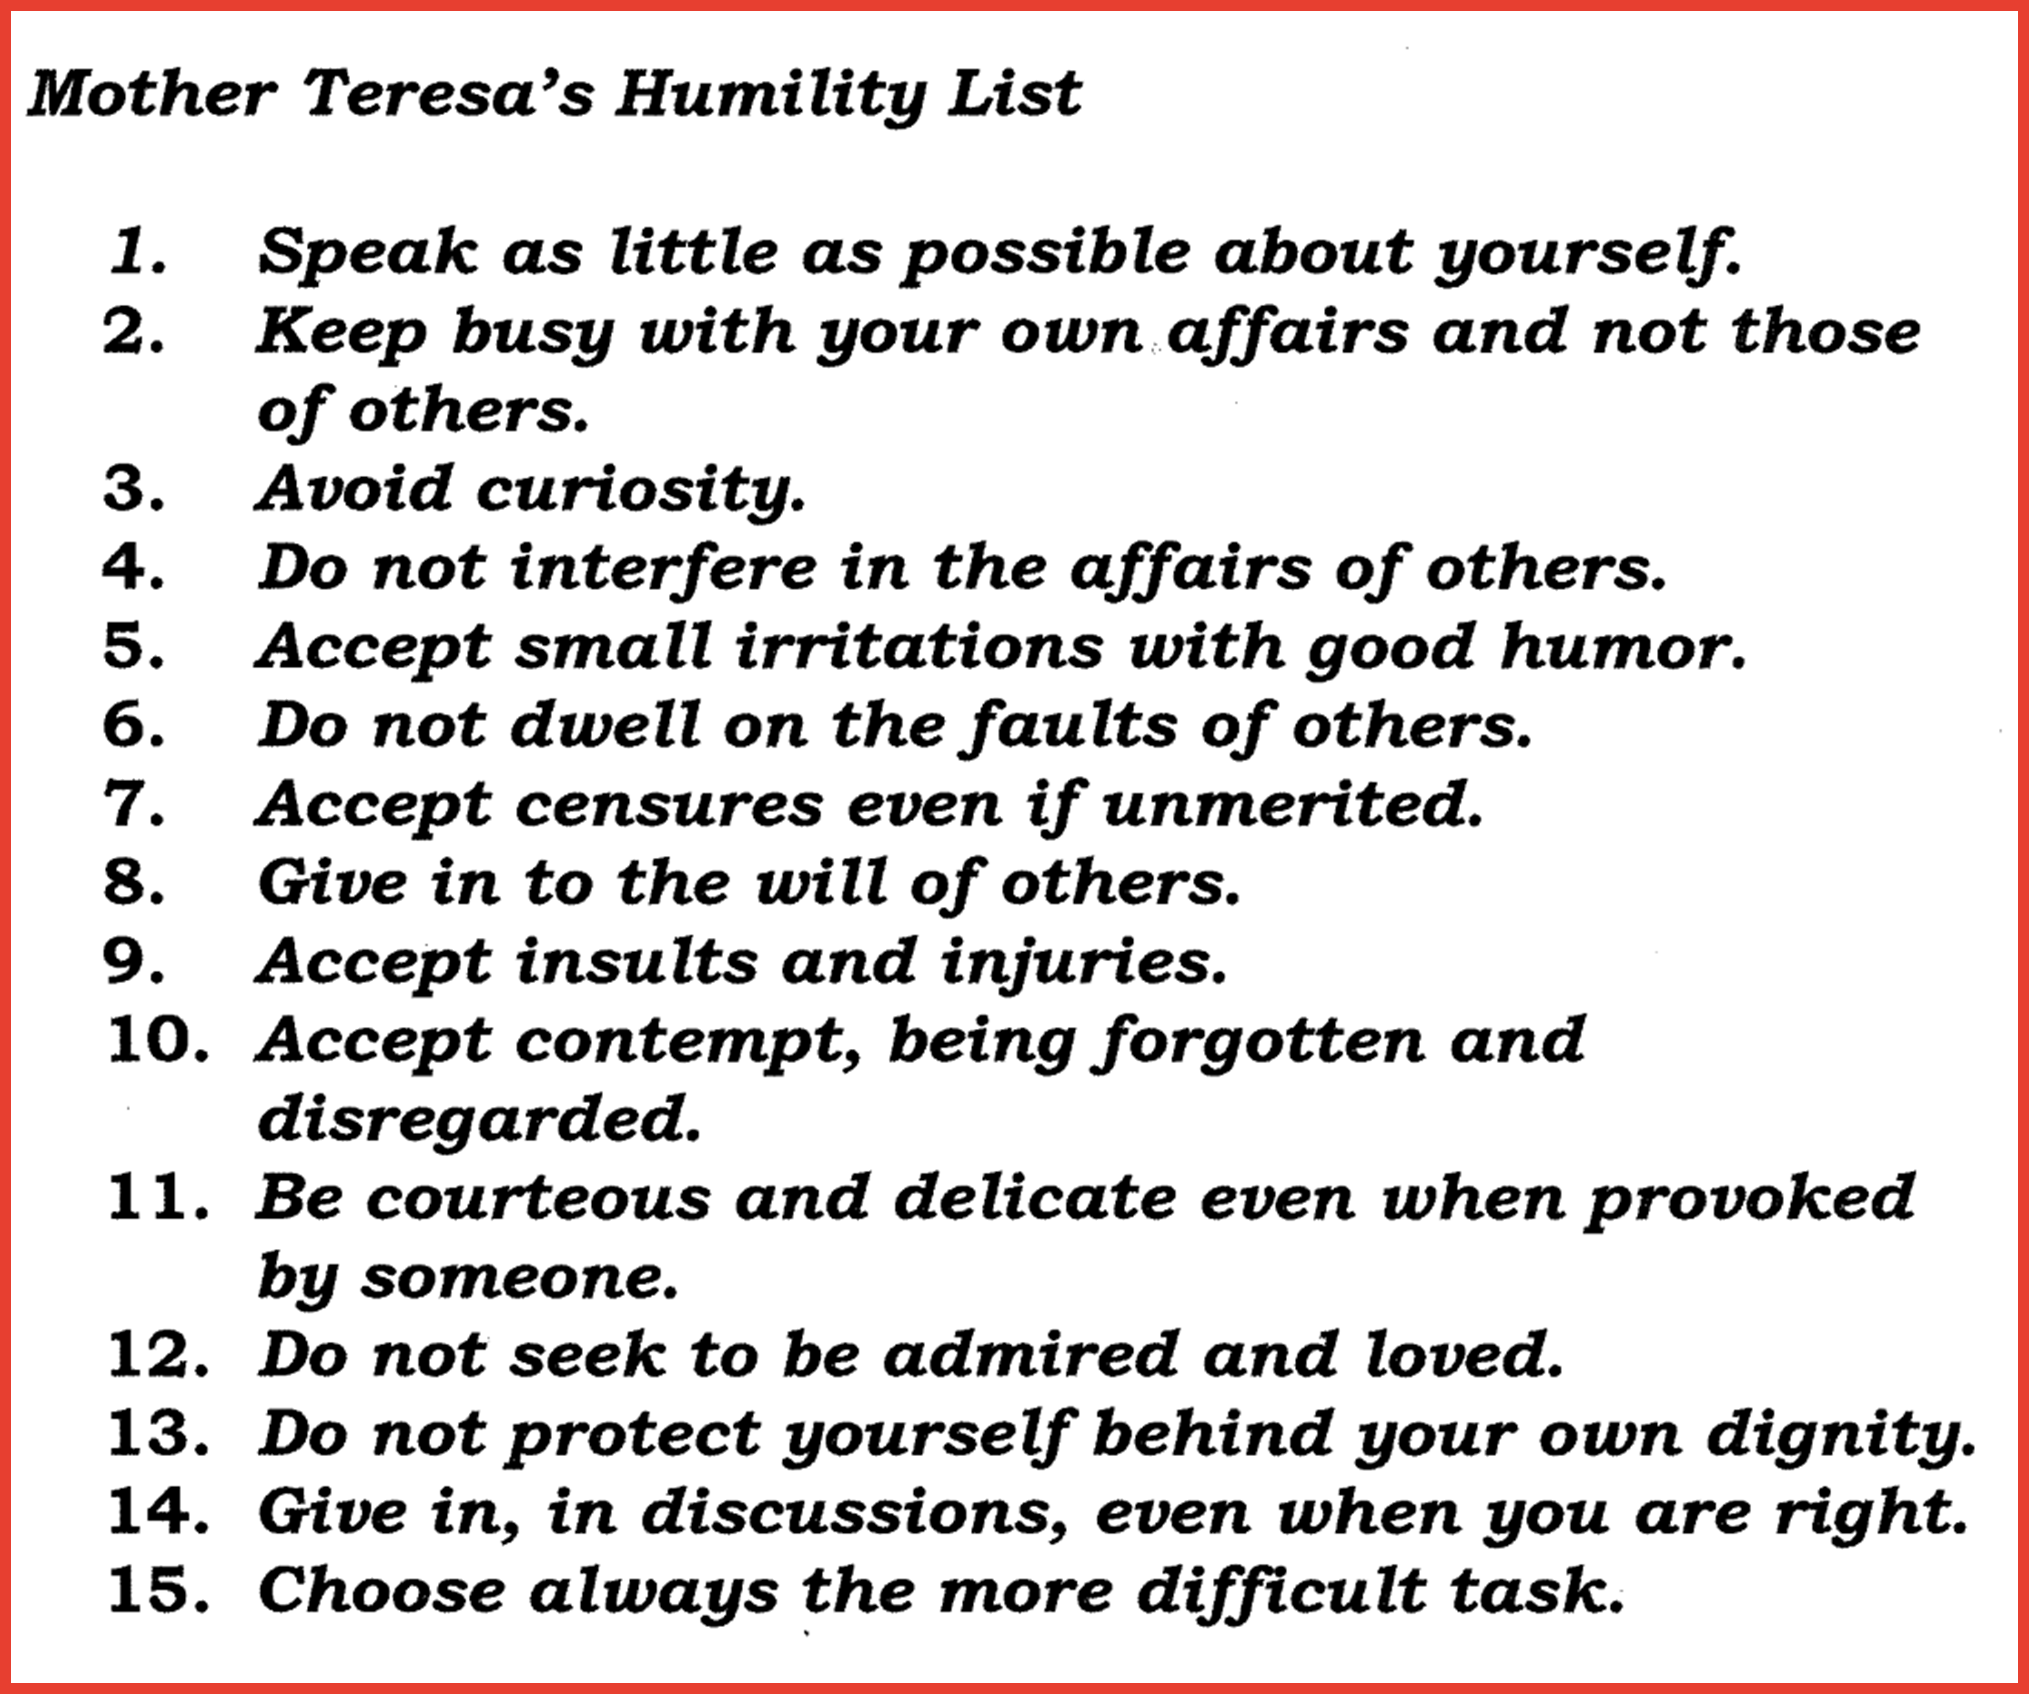 Mother Teresa's Humility List